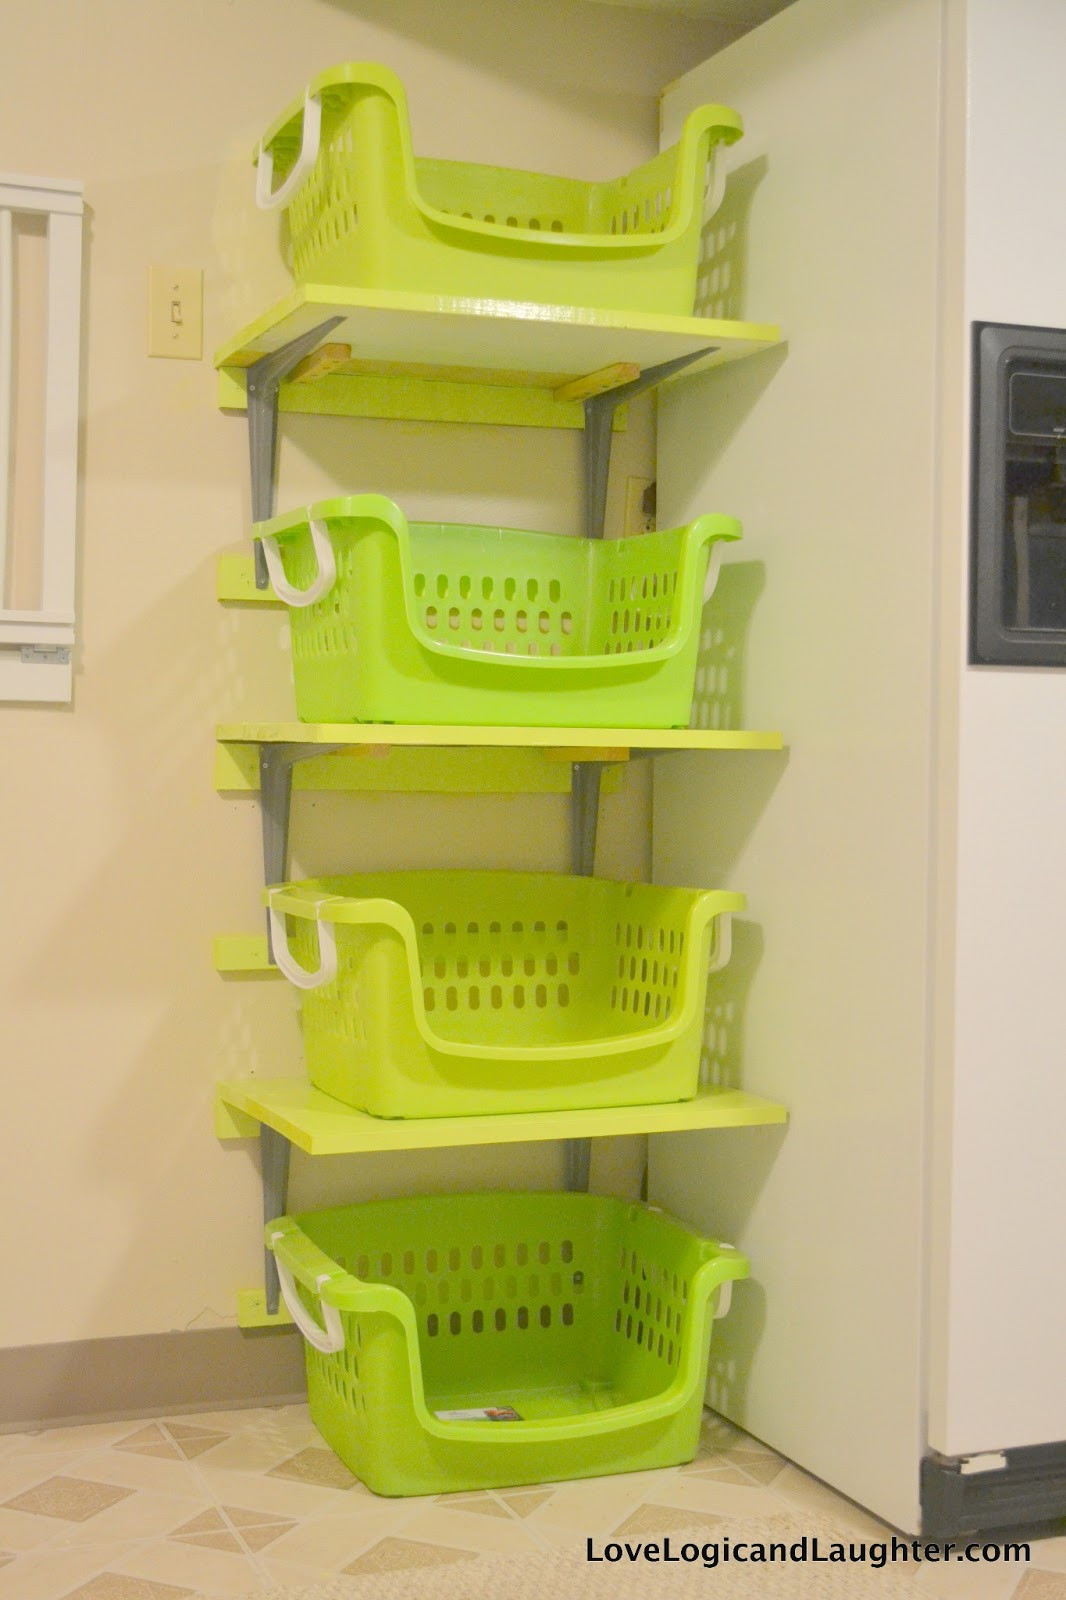 Laundry Basket Rack DIY
 Logic and Laughter Shelves for Laundry Baskets diy